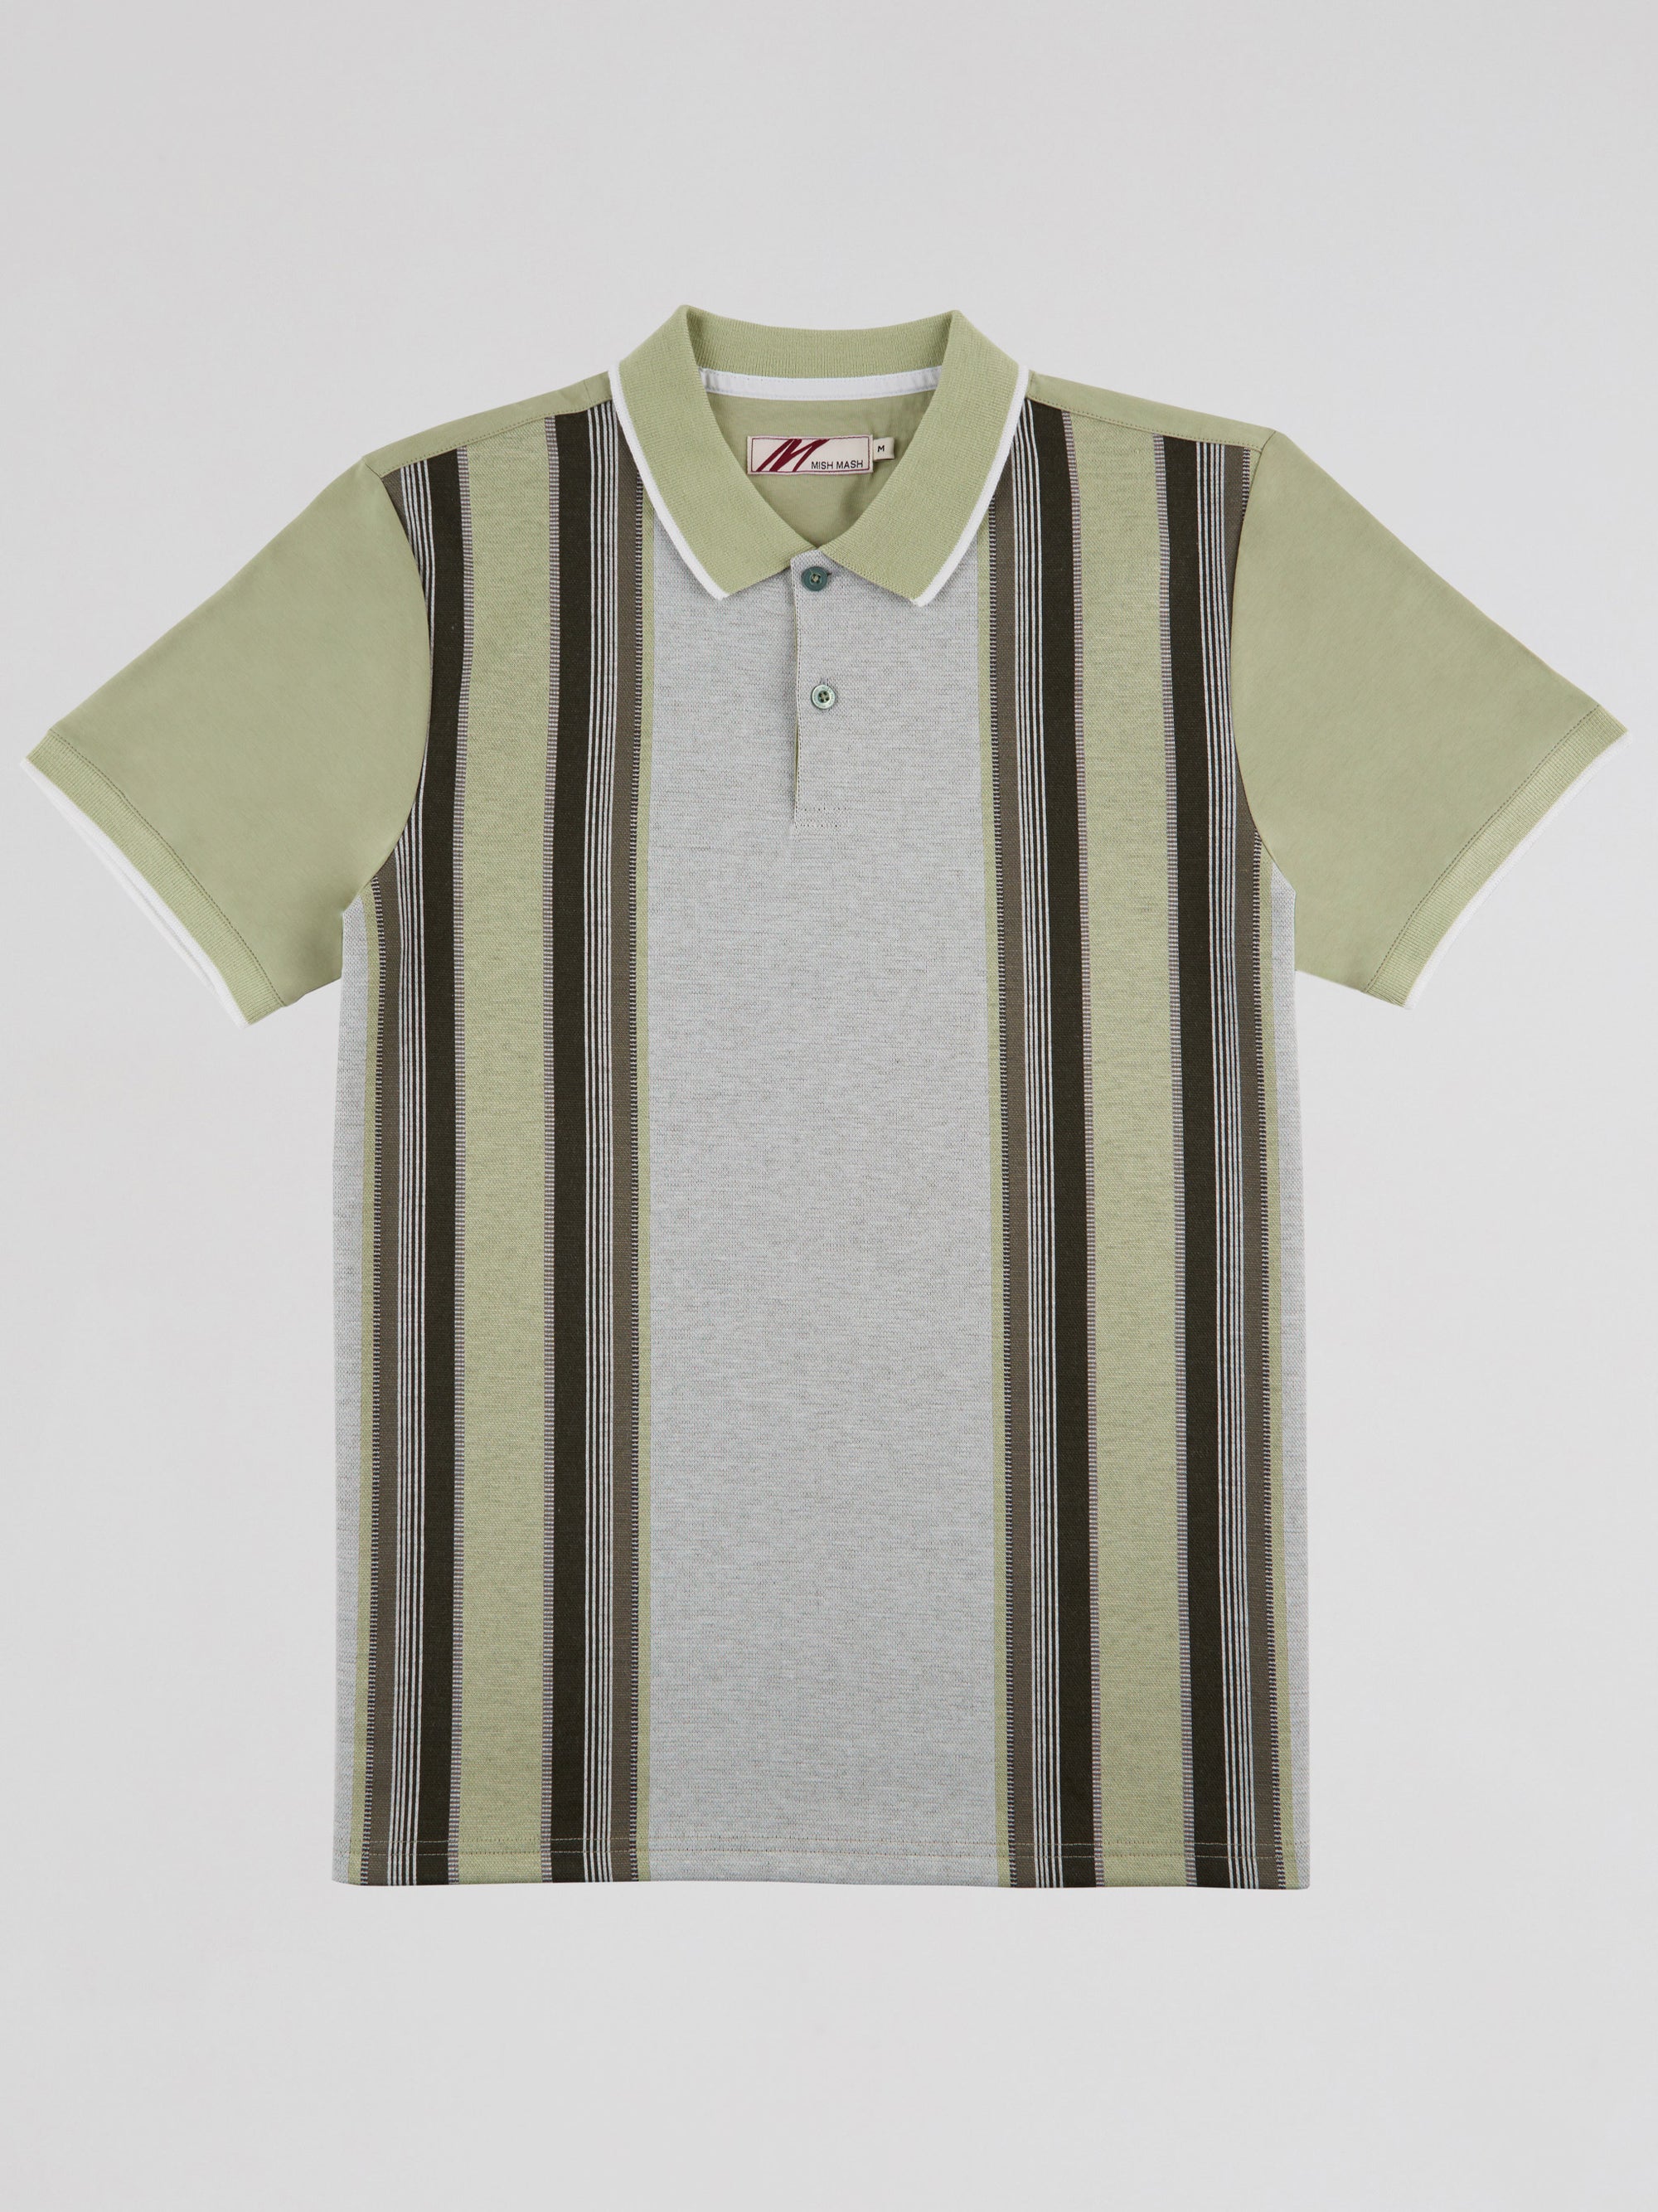 badger-desert-sage-striped-mens-jersey-short-sleeve-polo-shirt-mish-mash